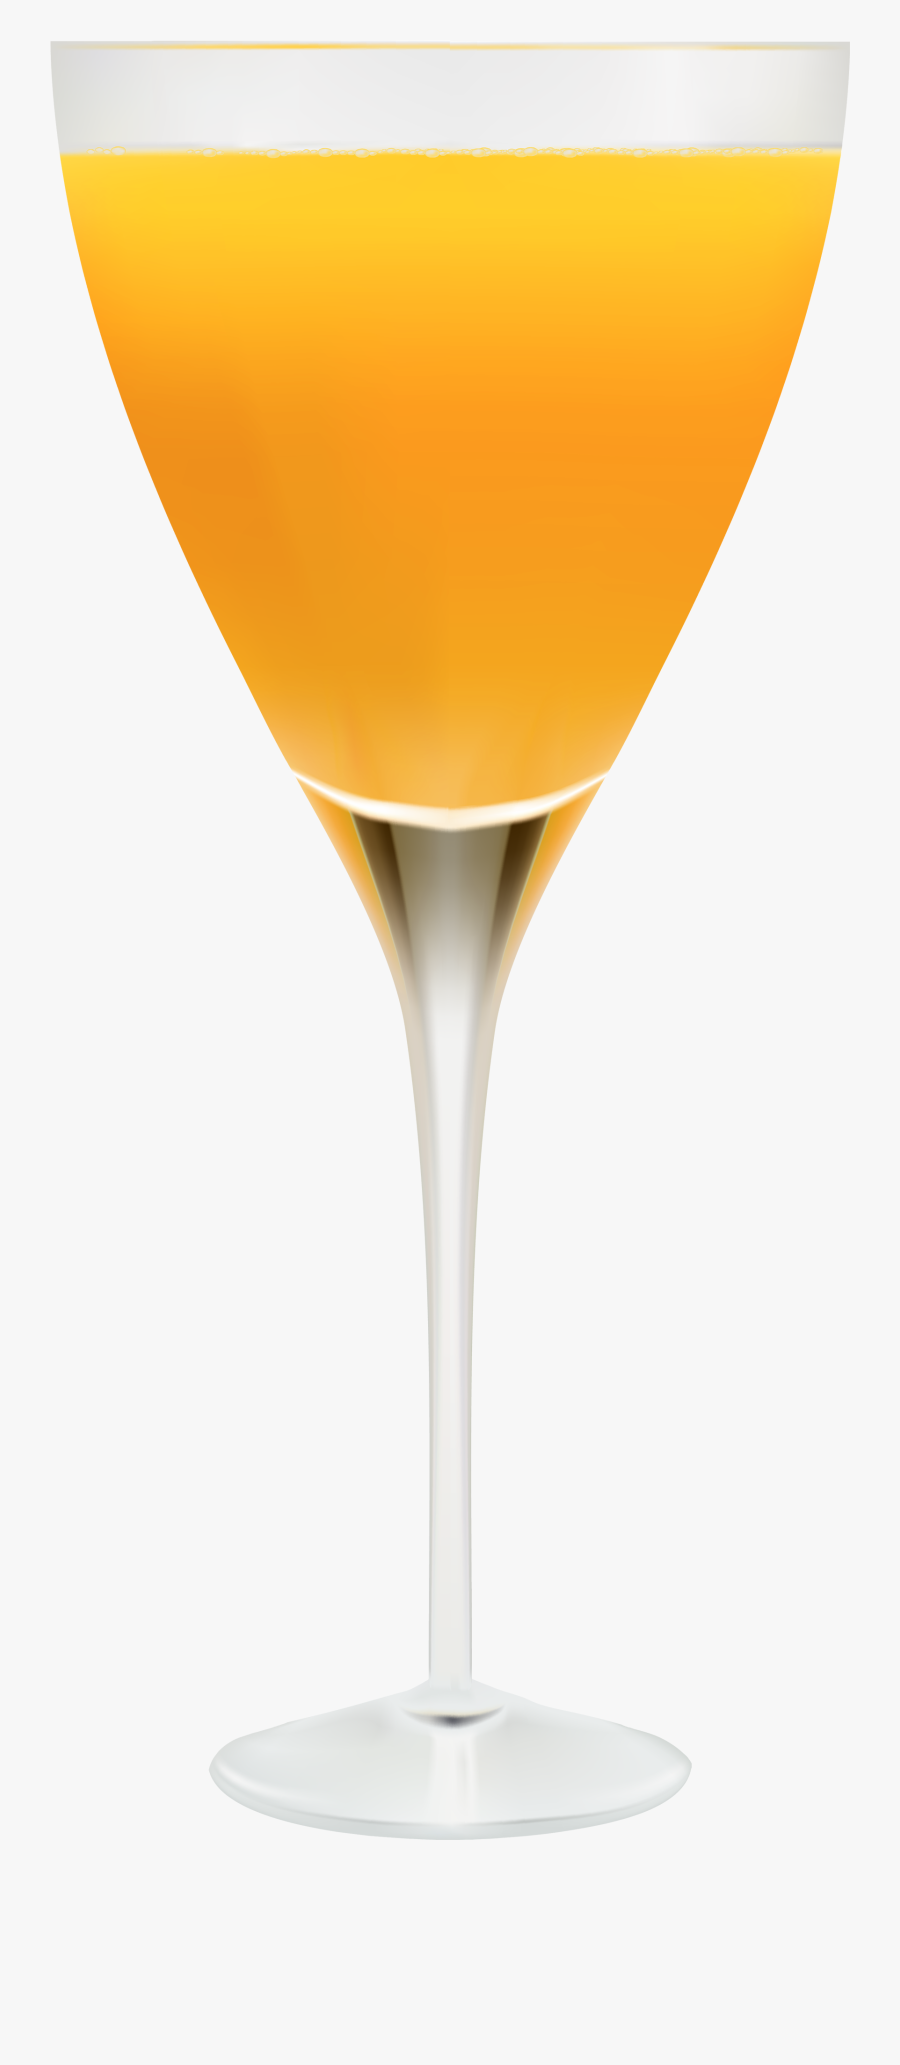 Mango Juice Glass Png, Transparent Clipart